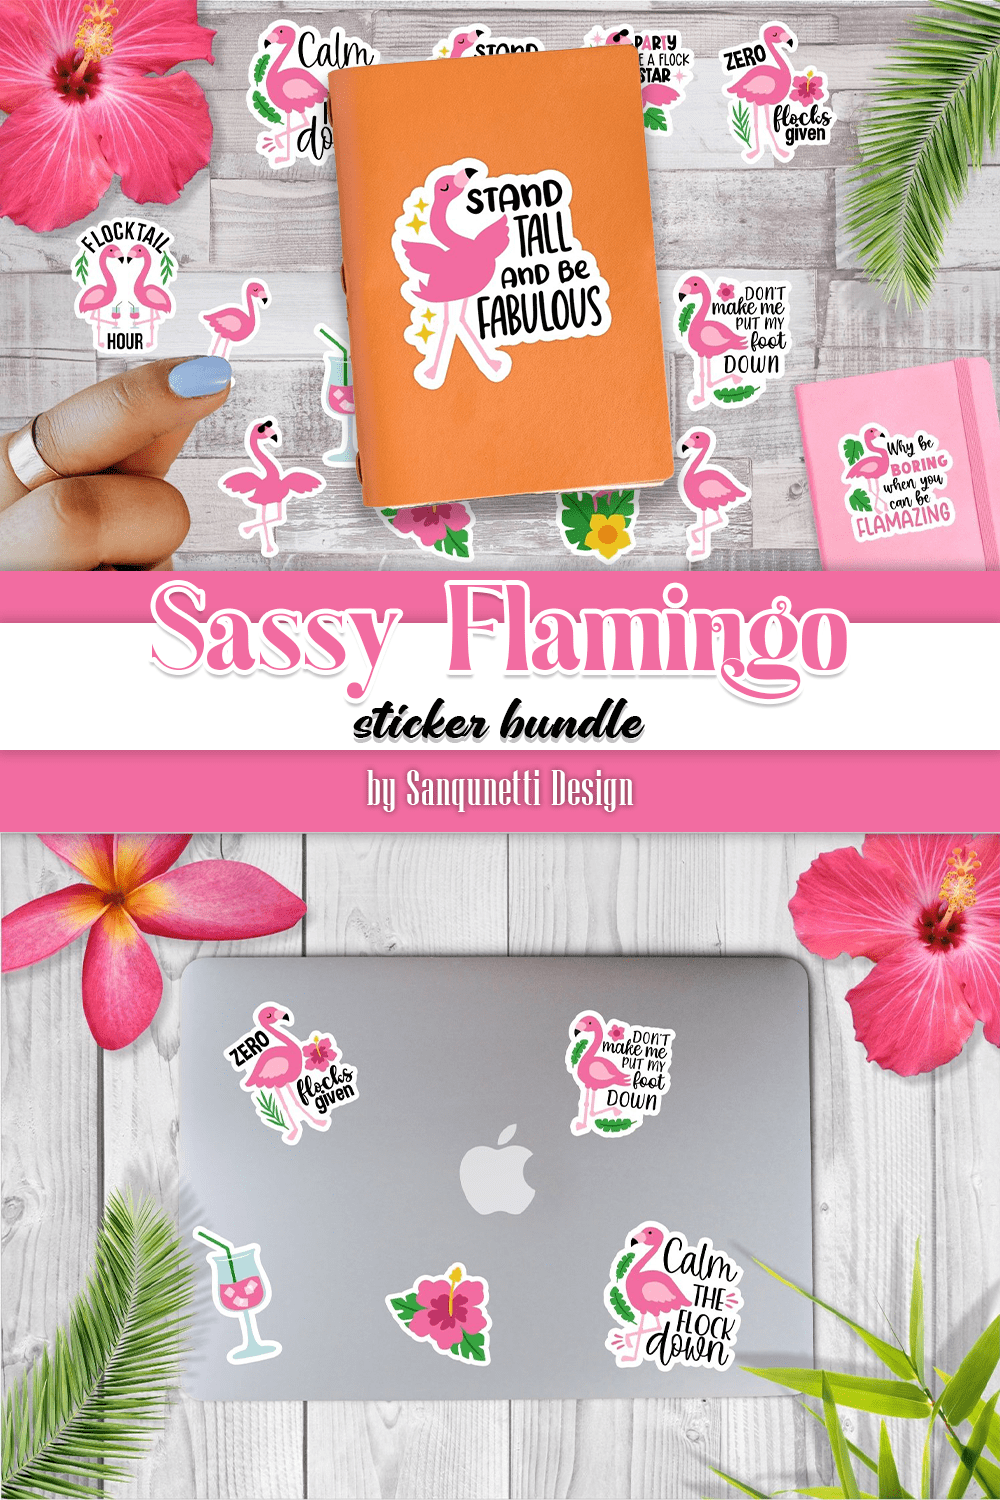 Sassy flamingo sticker bundle - pinterest image preview.